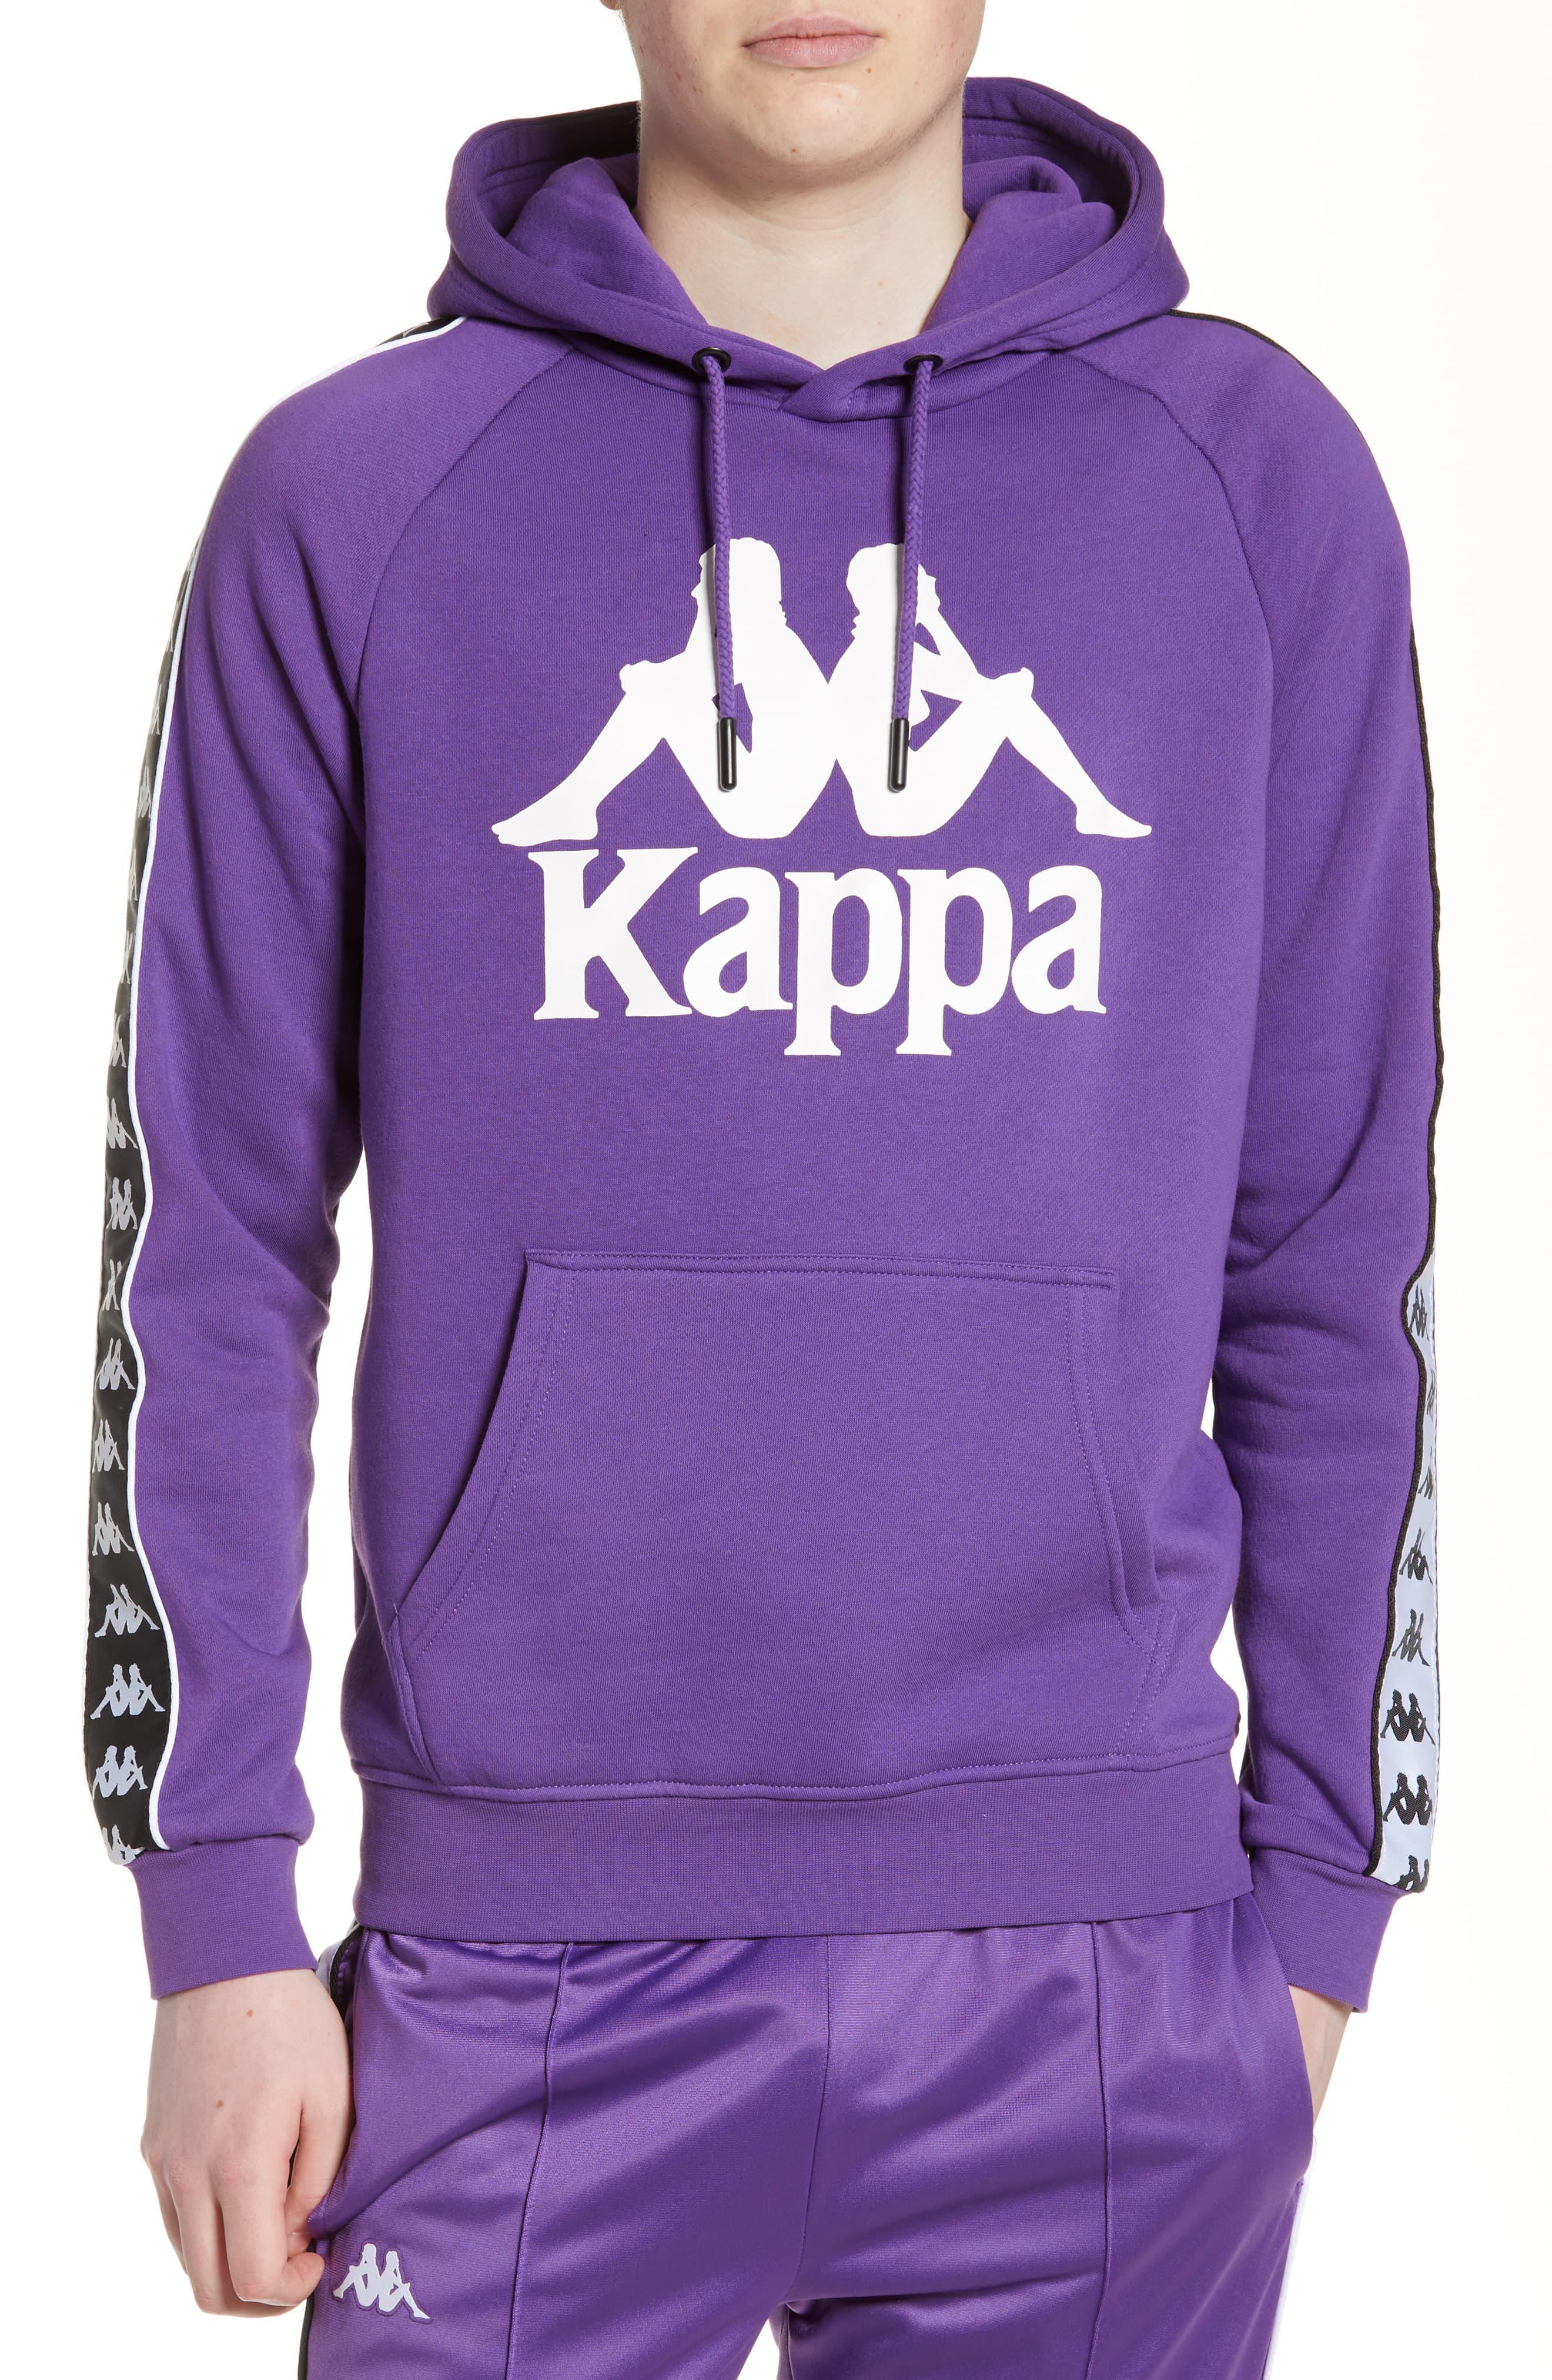 Kappa Cotton Hurtado Logo Hoodie in Violet/Black/White (Purple) for Men ...